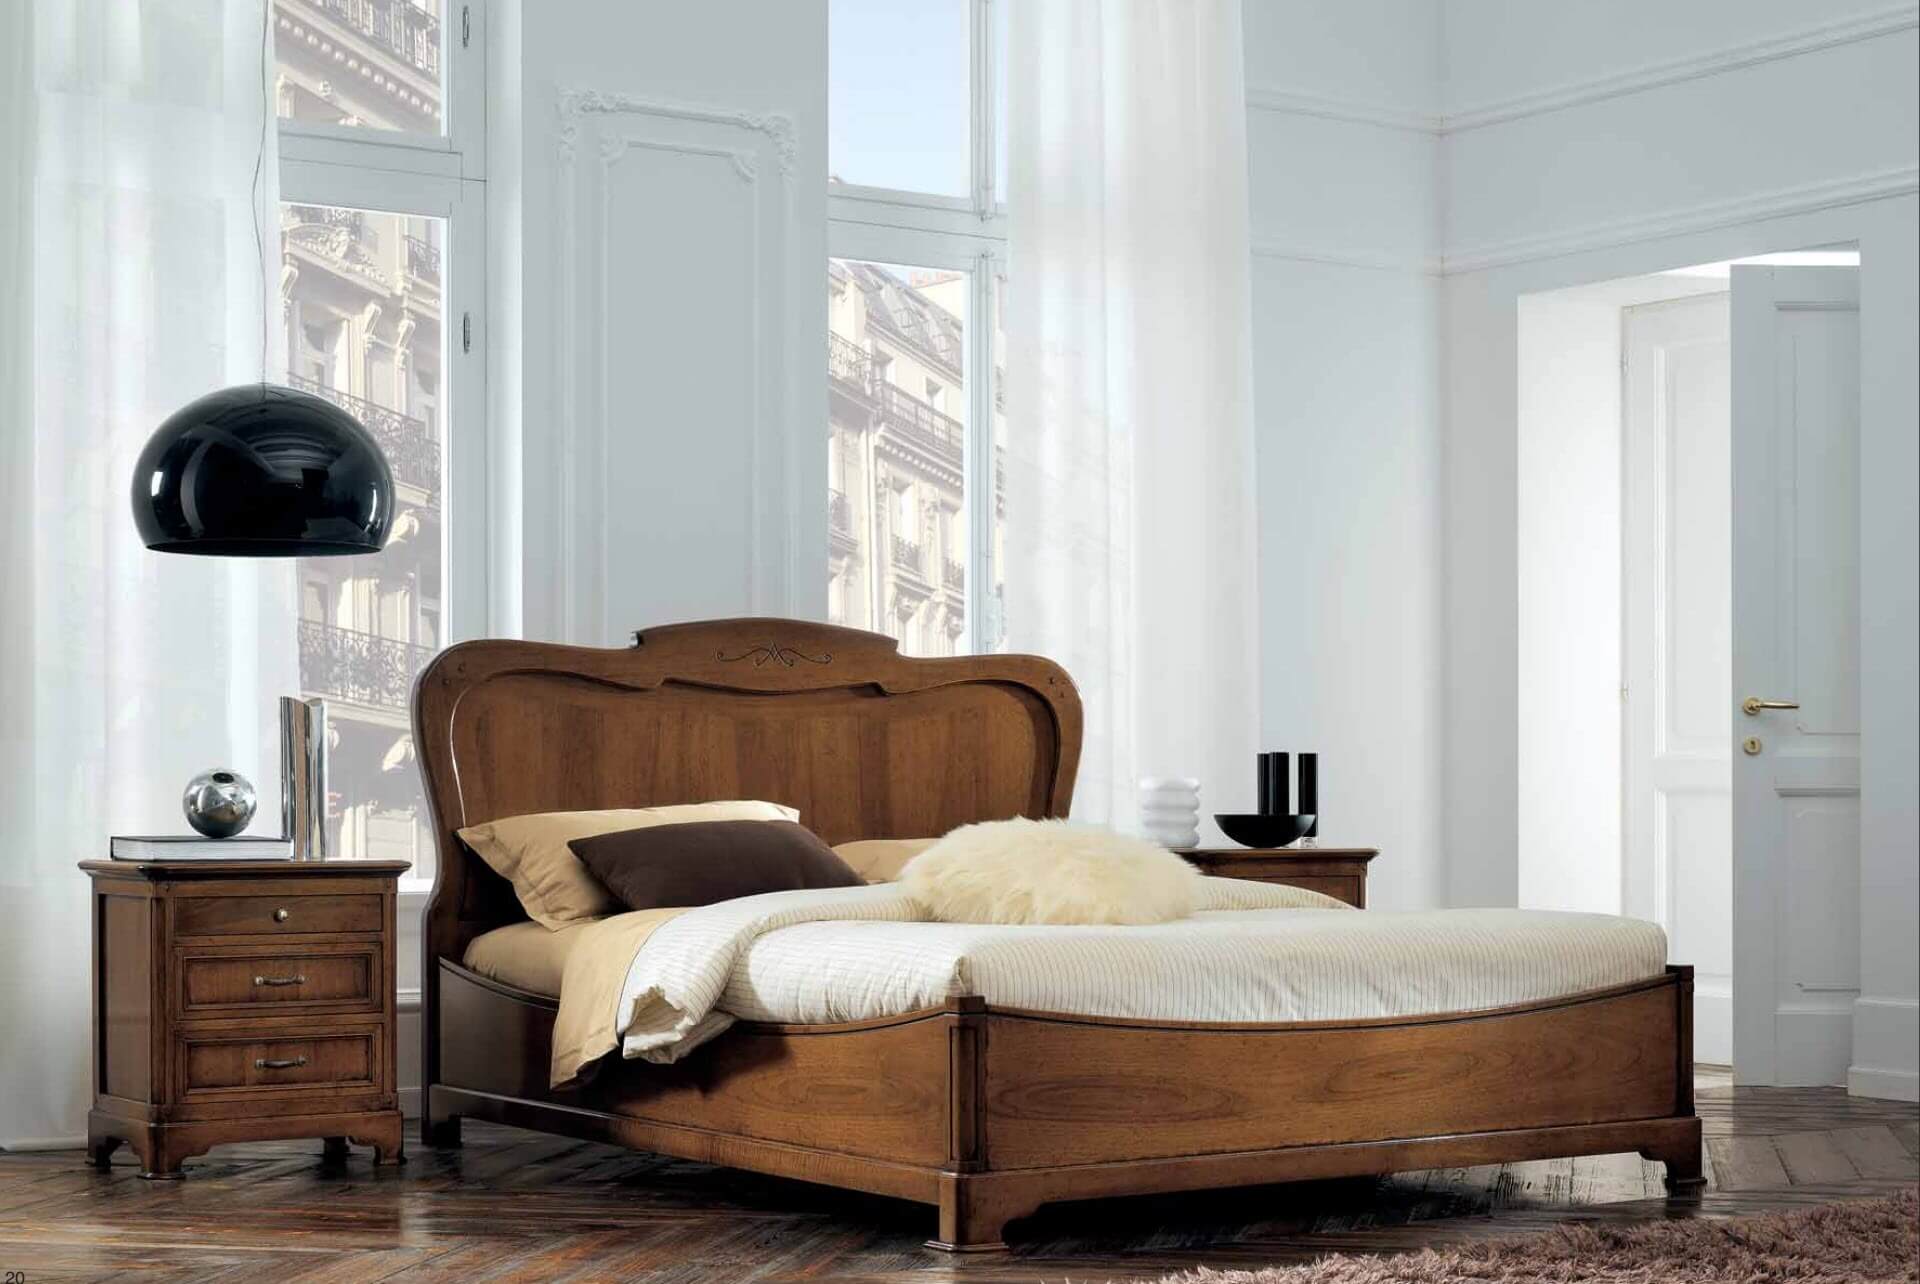 Matisse klasszikus ágy - Monte Grappa Mobili